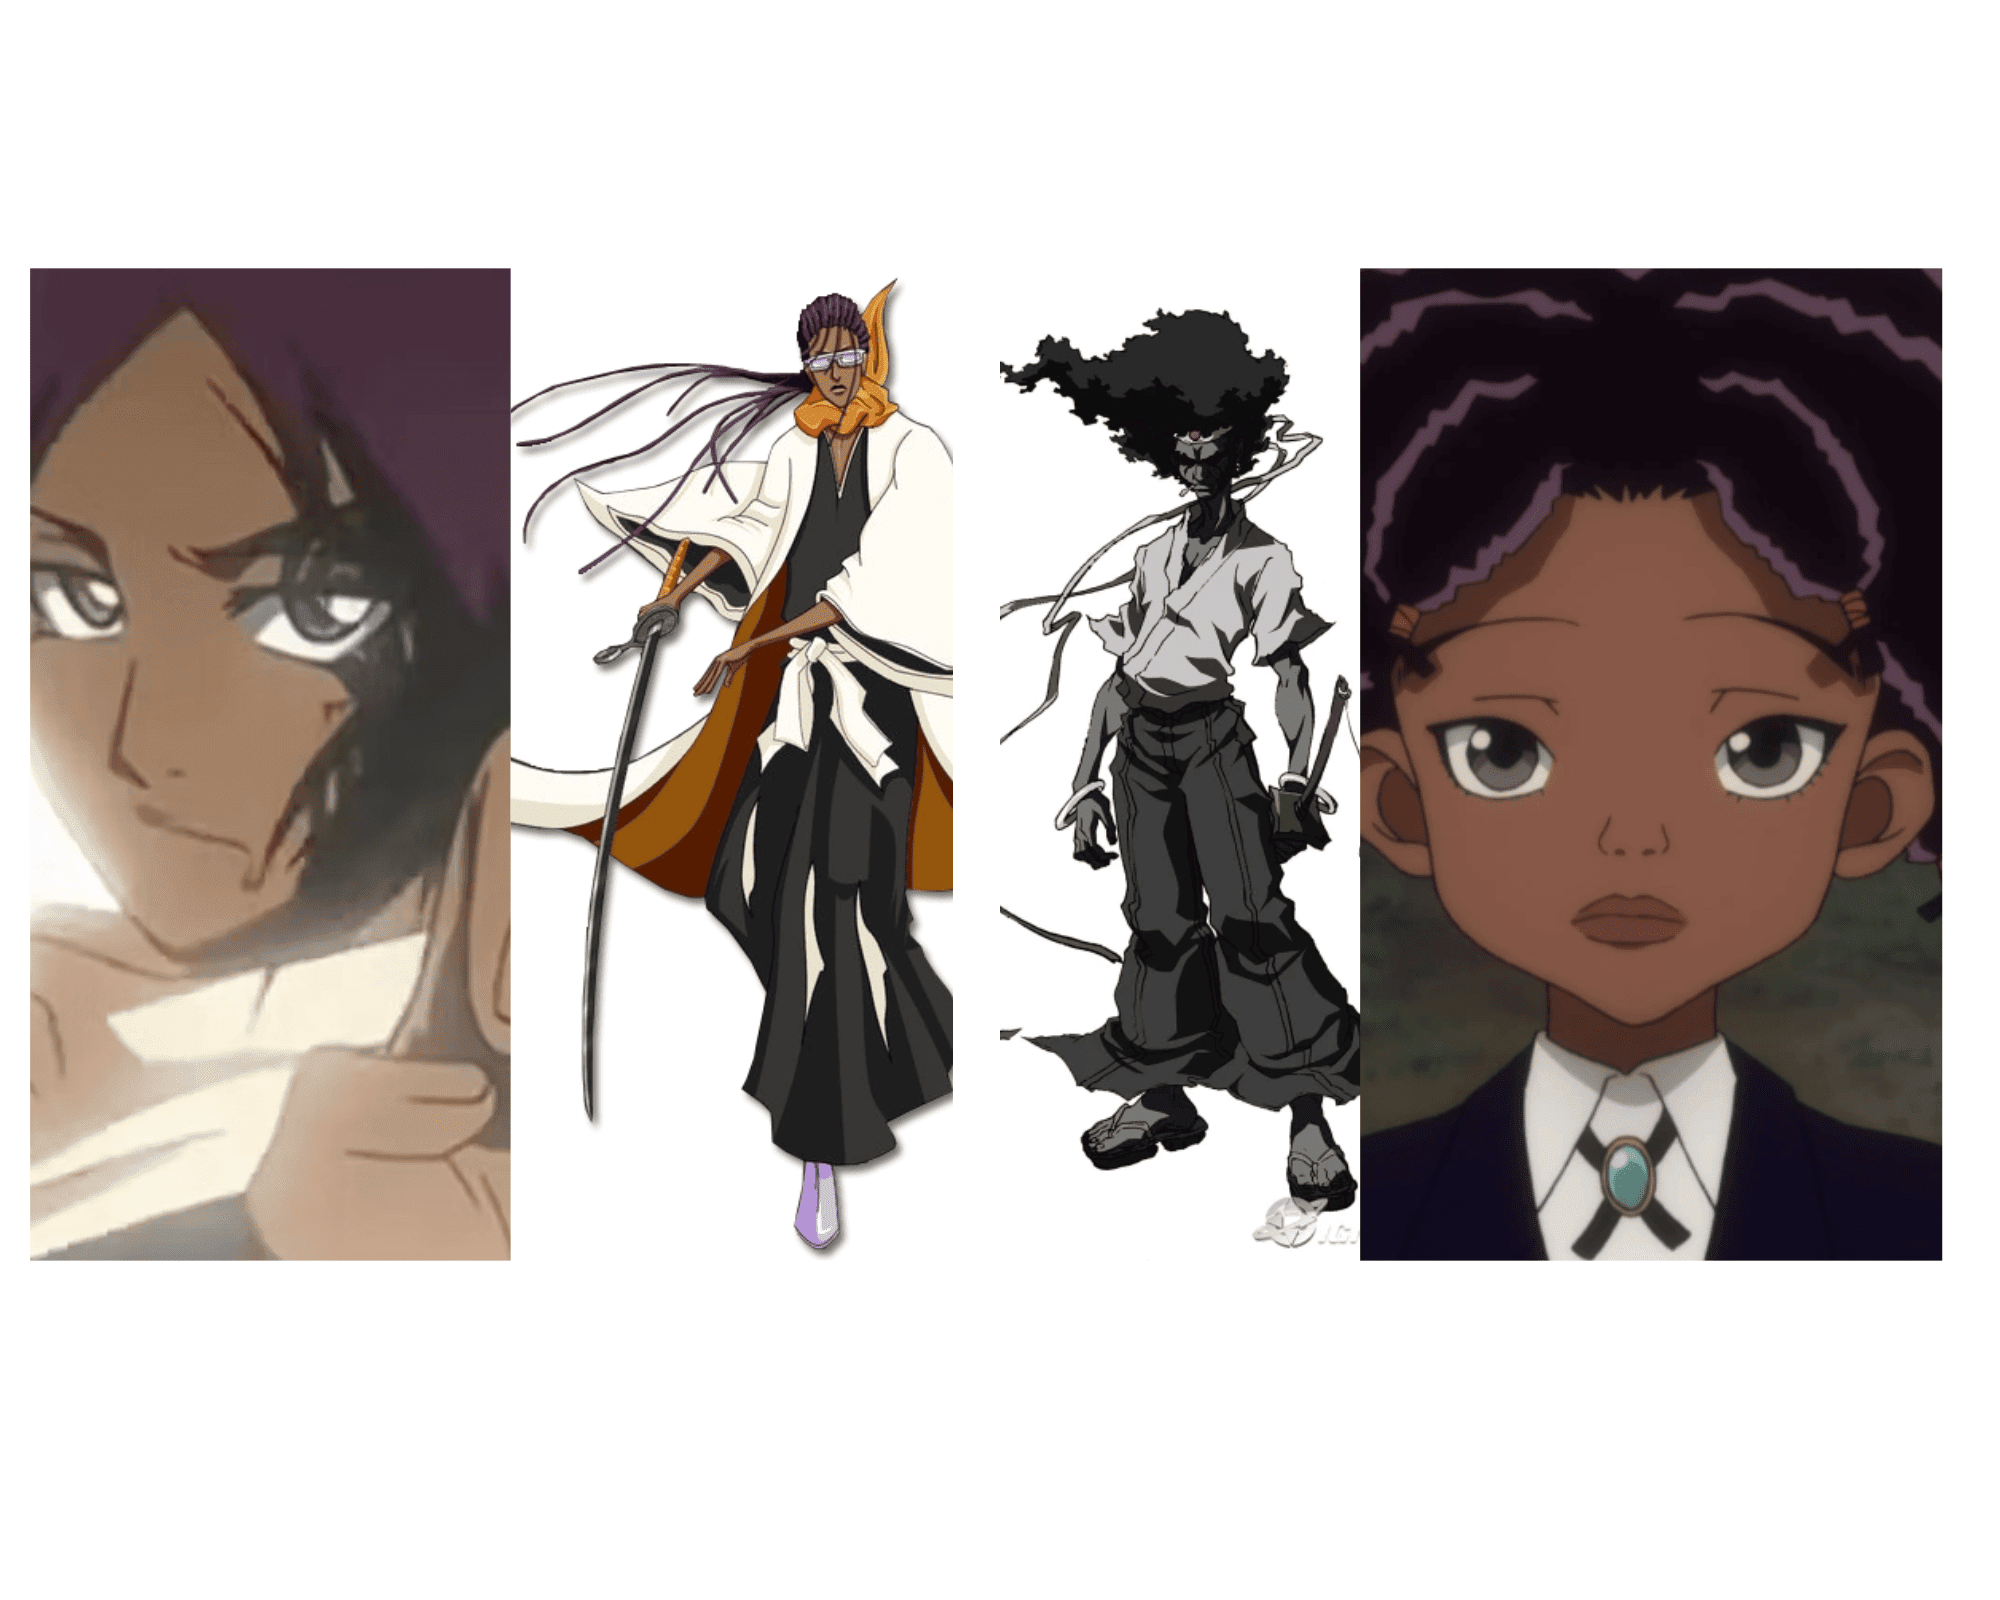 black anime characters